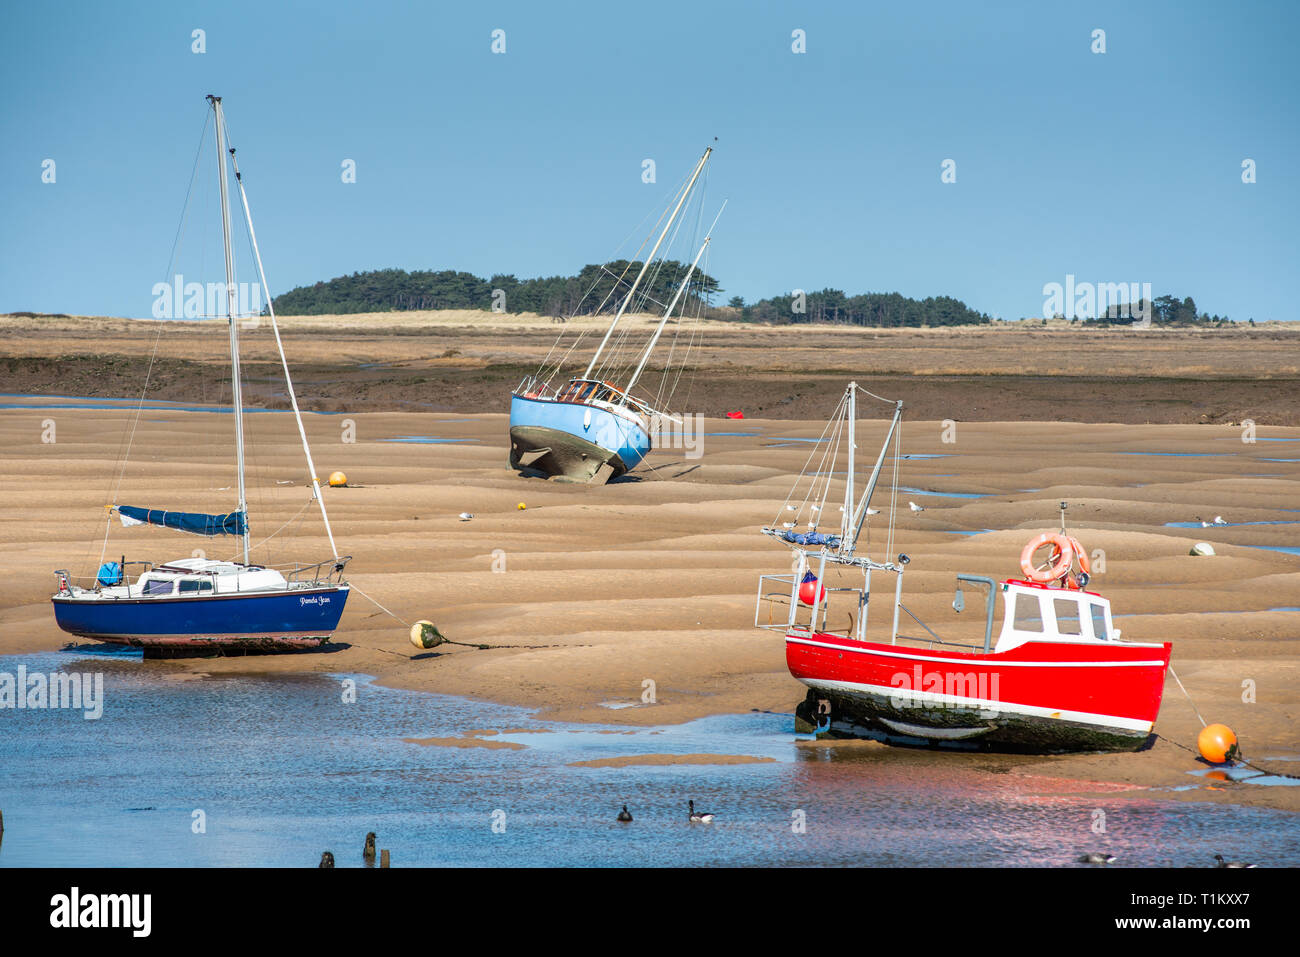 Colourful boats marooned on sandbanks at low tide on East Fleet river estuary at Wells next the sea, North Norfolk coast, East Anglia, England, UK. Stock Photo